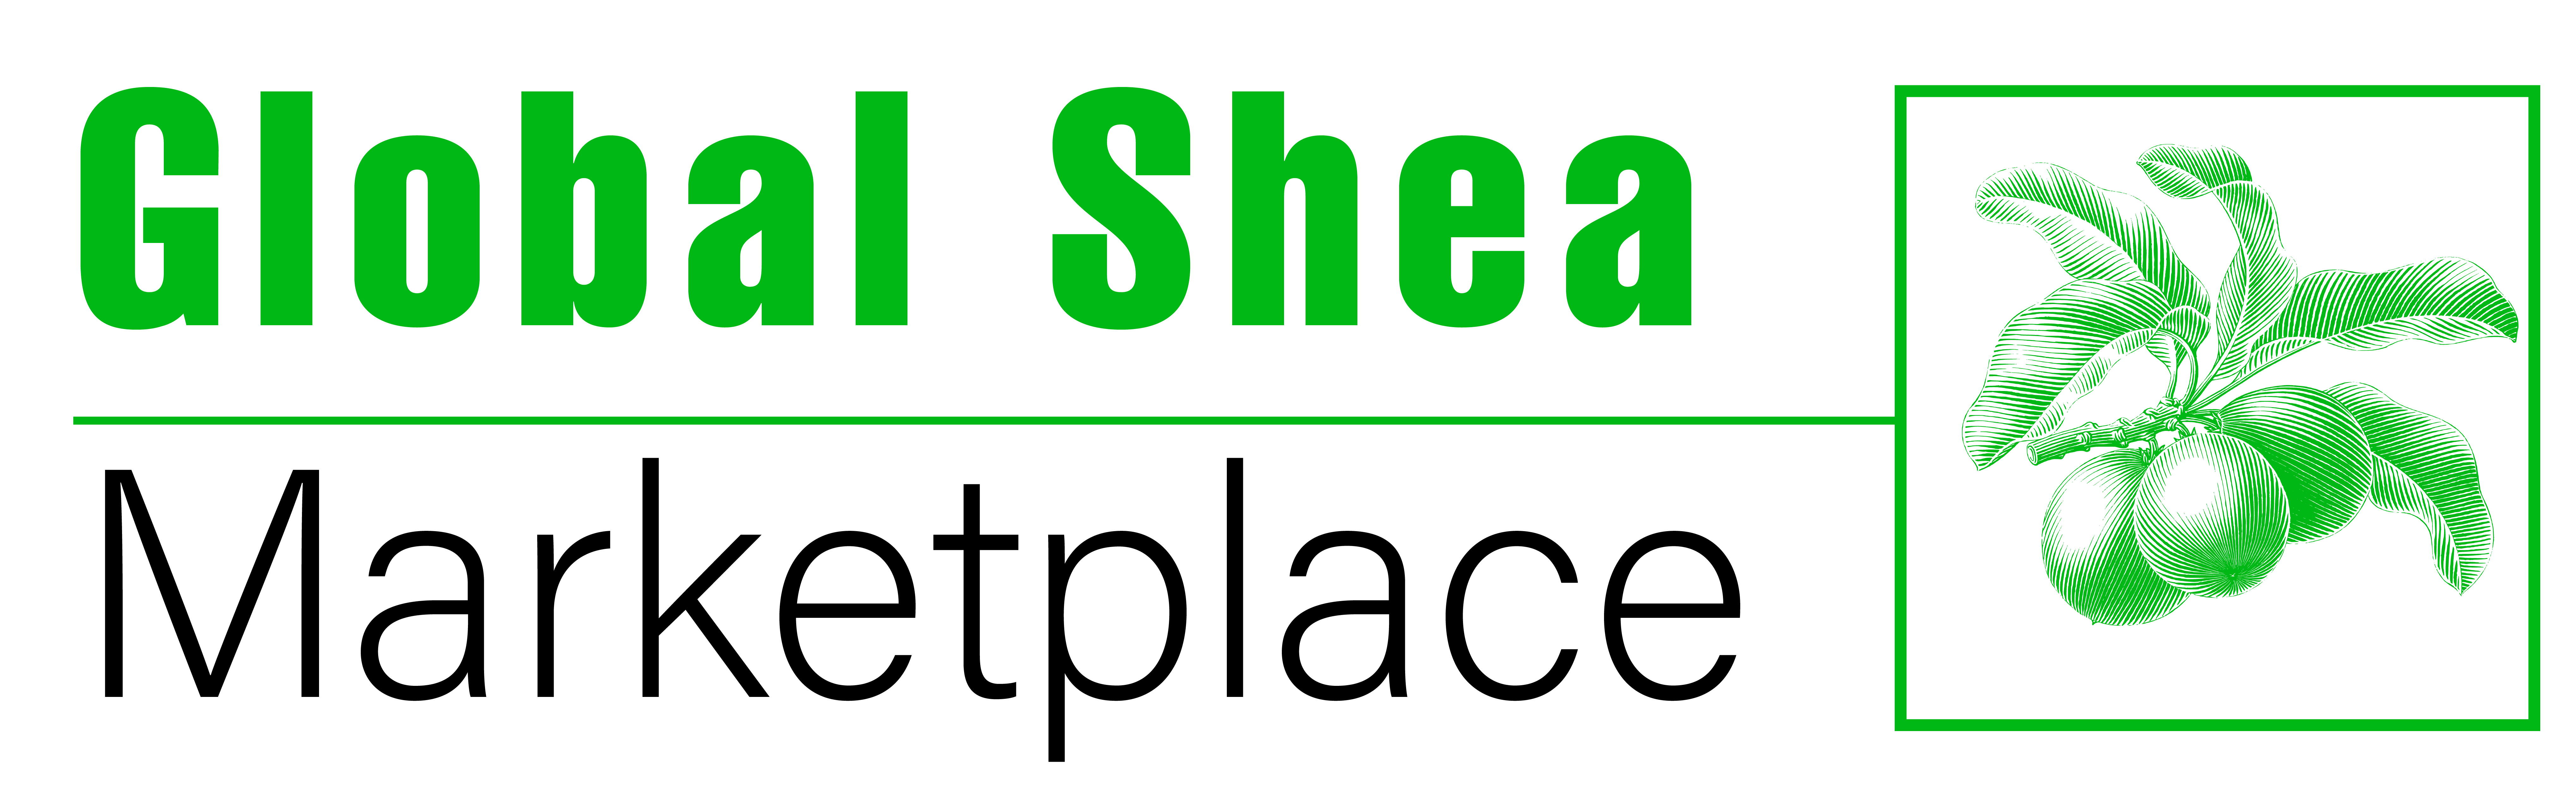 Global Shea Marketplace Logo